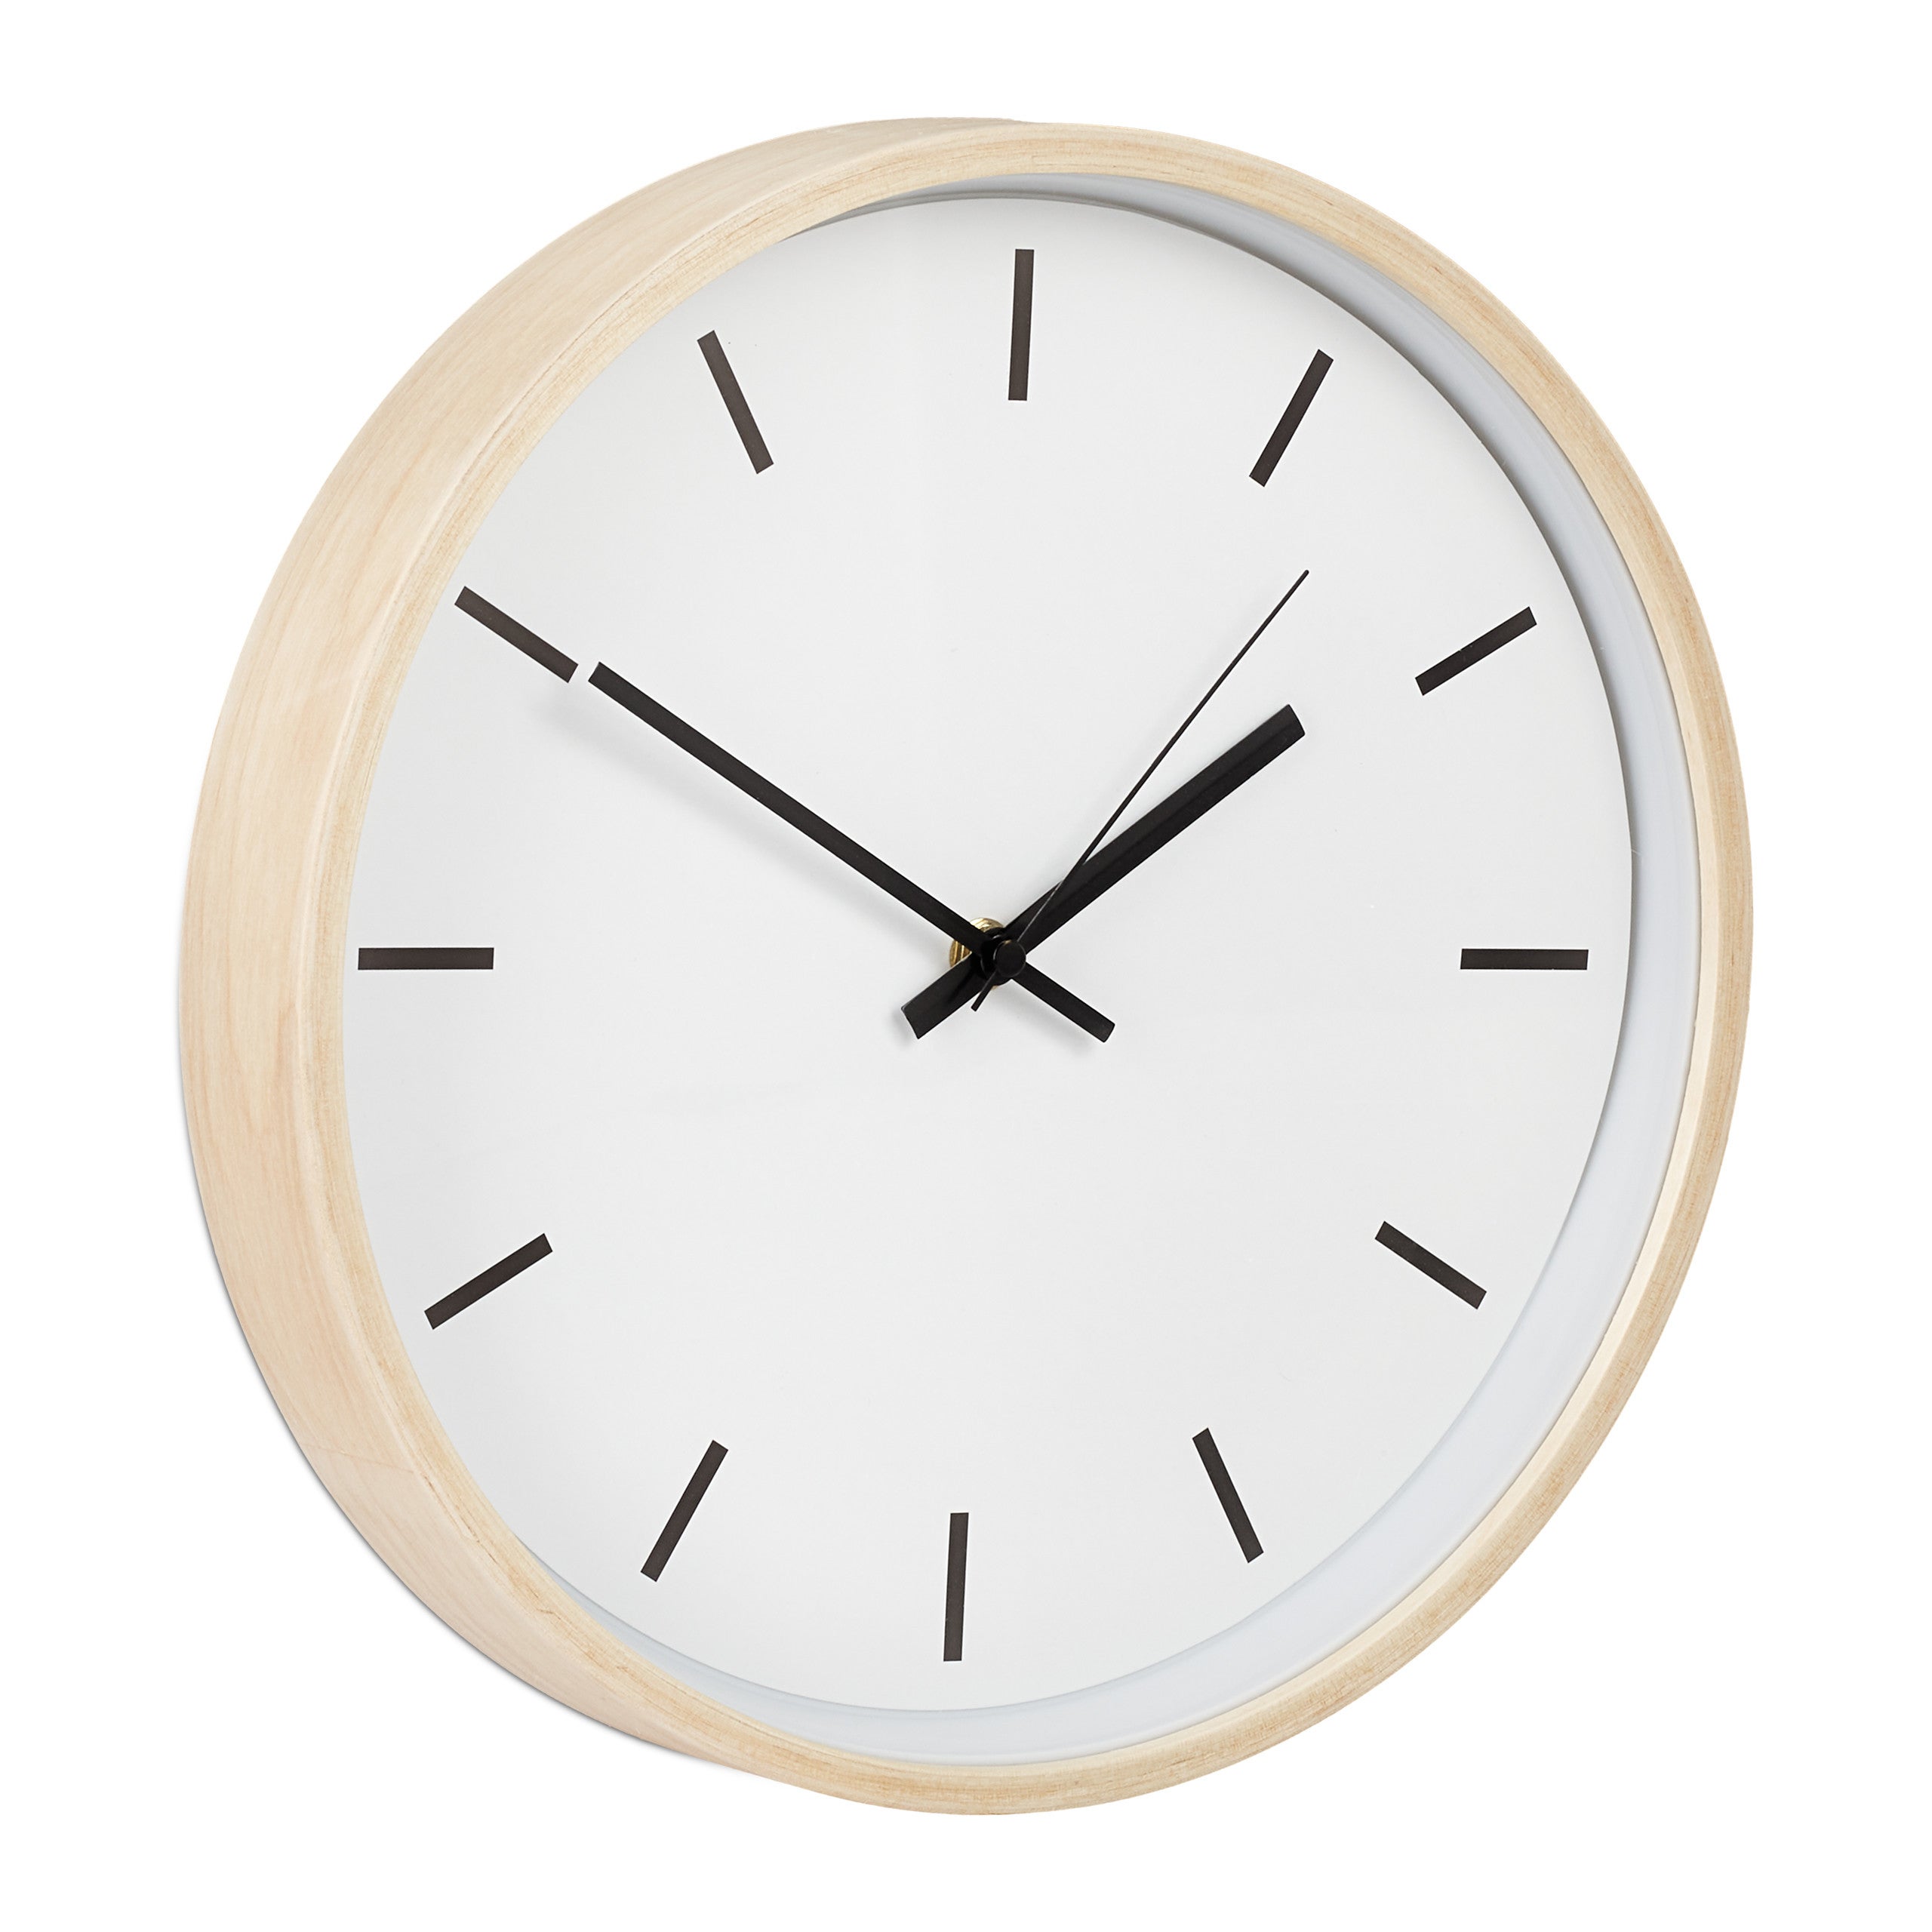 Relaxdays Horloge Murale Ronde Ø 20 cm Petite Horloge à Suspendre Design Classique à Piles Aiguilles Secondaires Blanc 